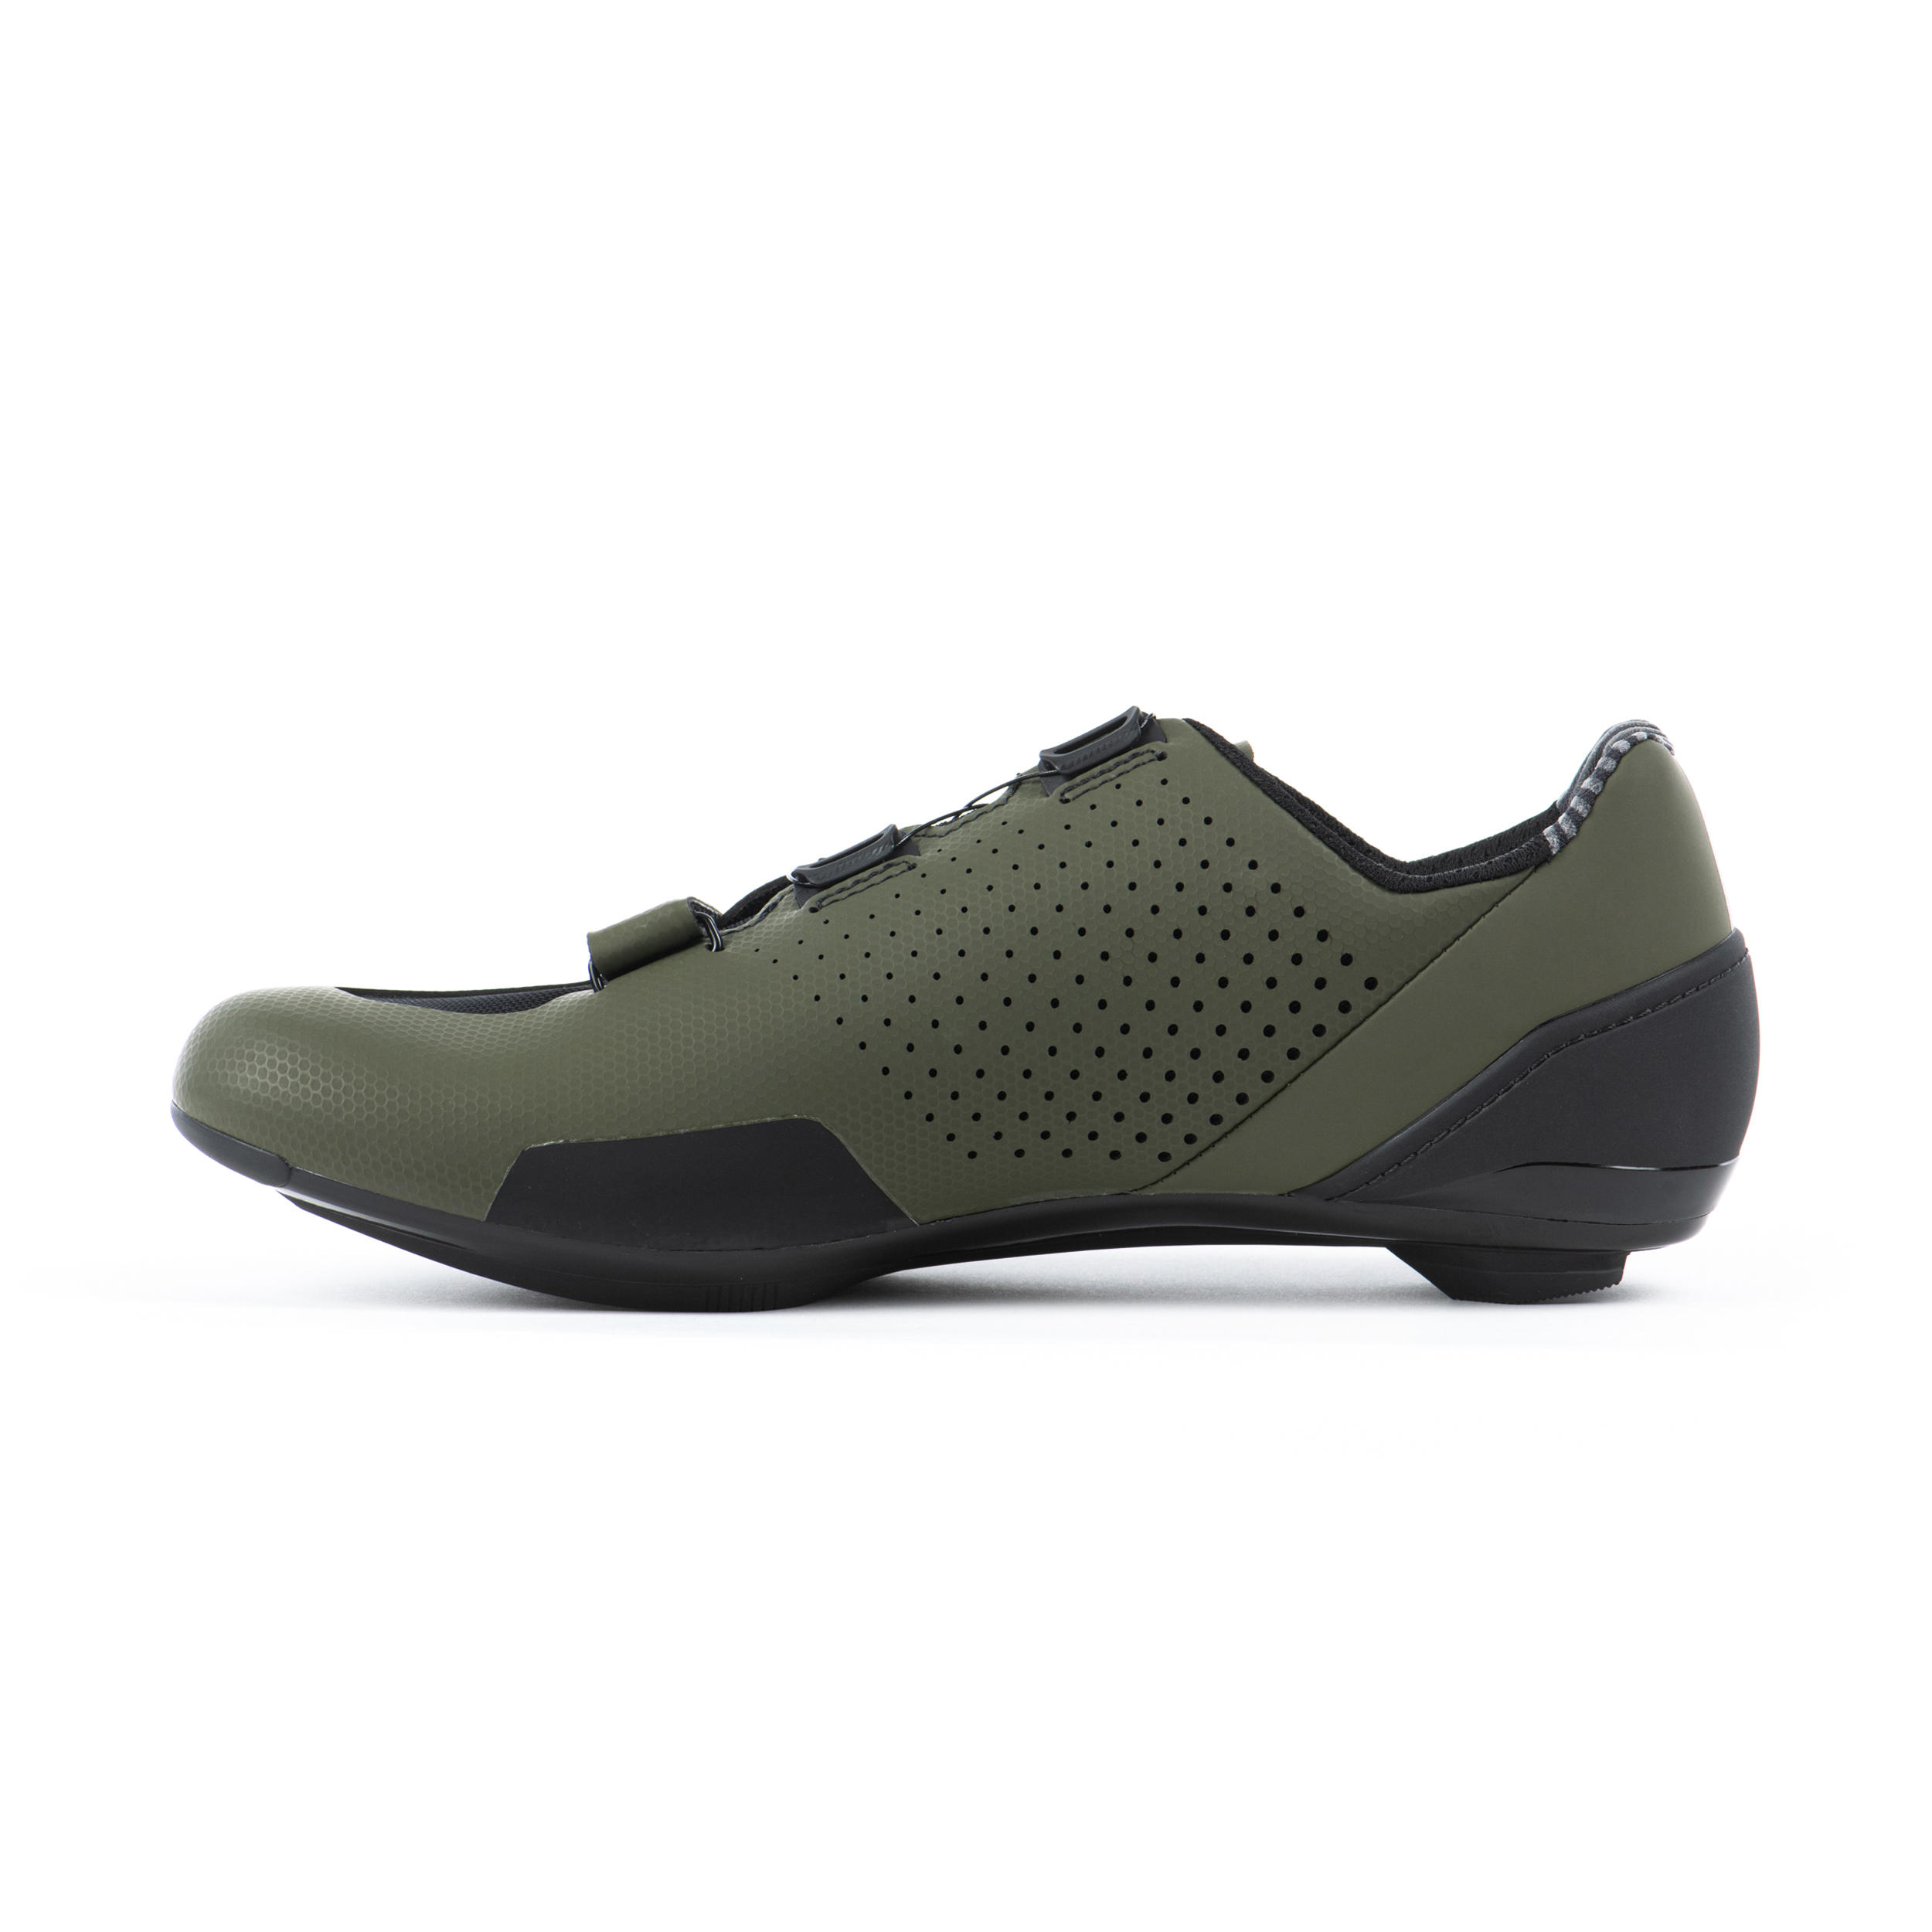 RCR520 Carbon Road Cycling Shoes - Khaki 3/5